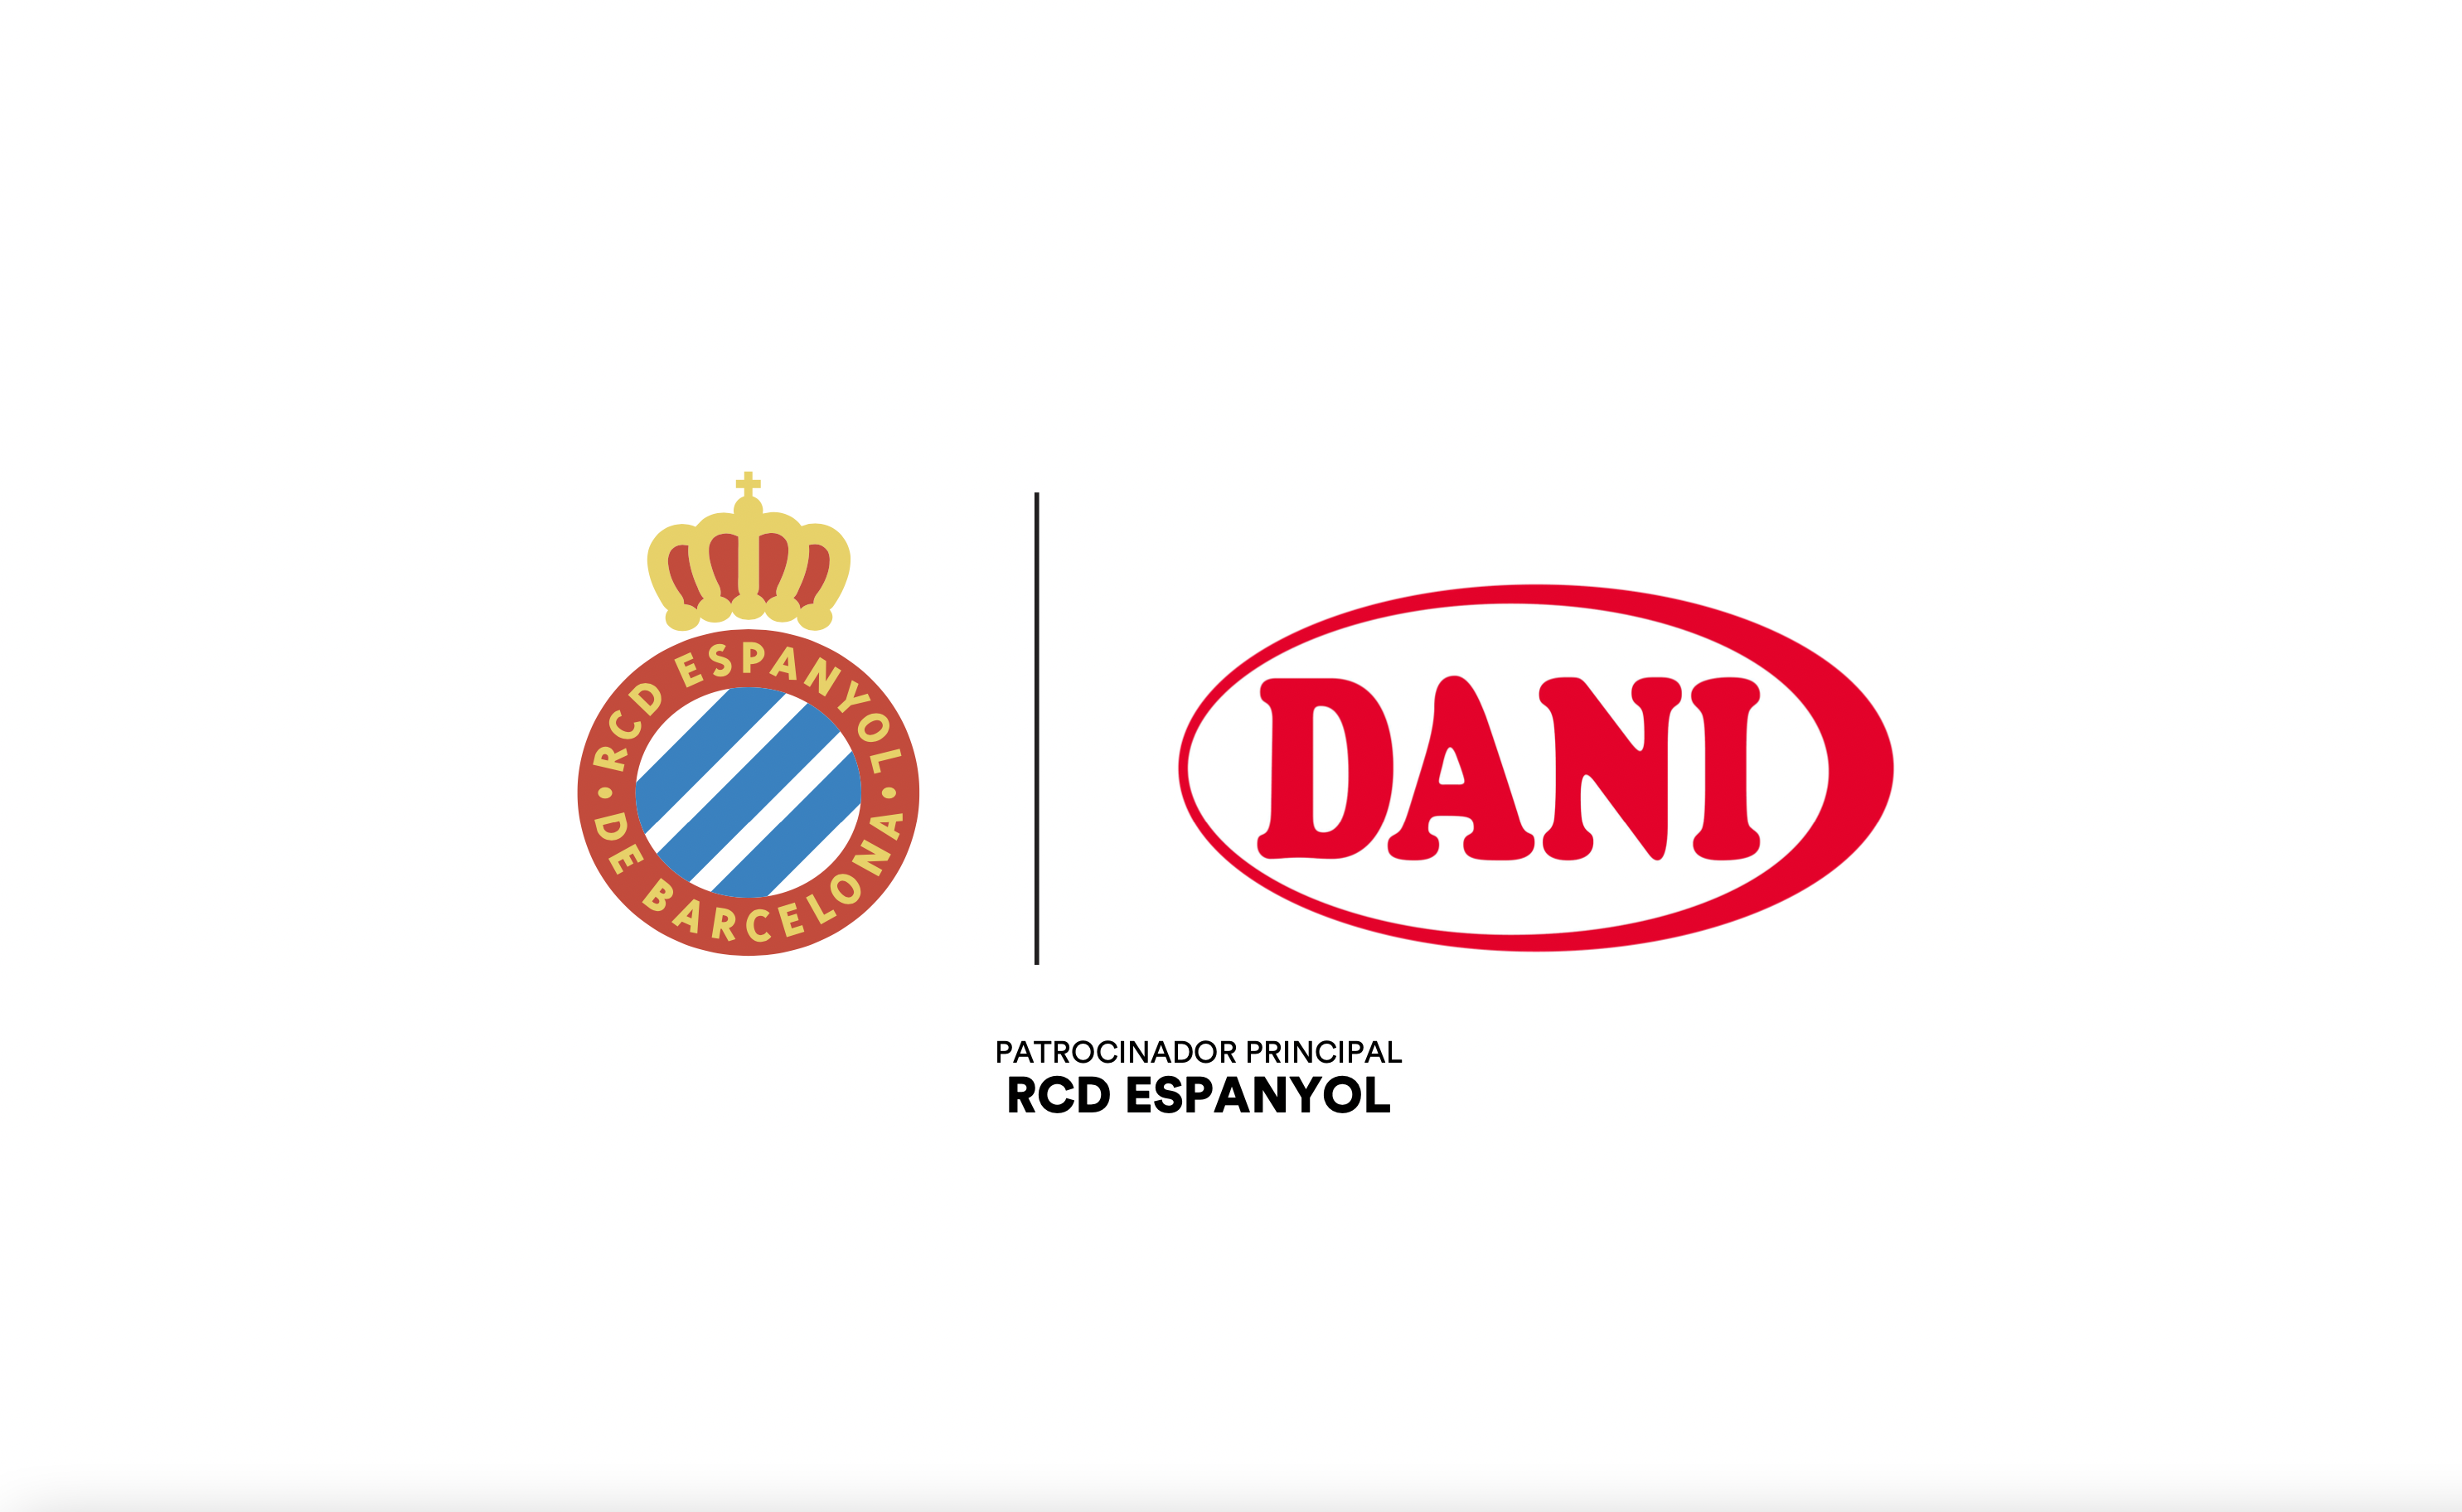 RCD Espanyol and Conservas Dani sign sponsorship deal